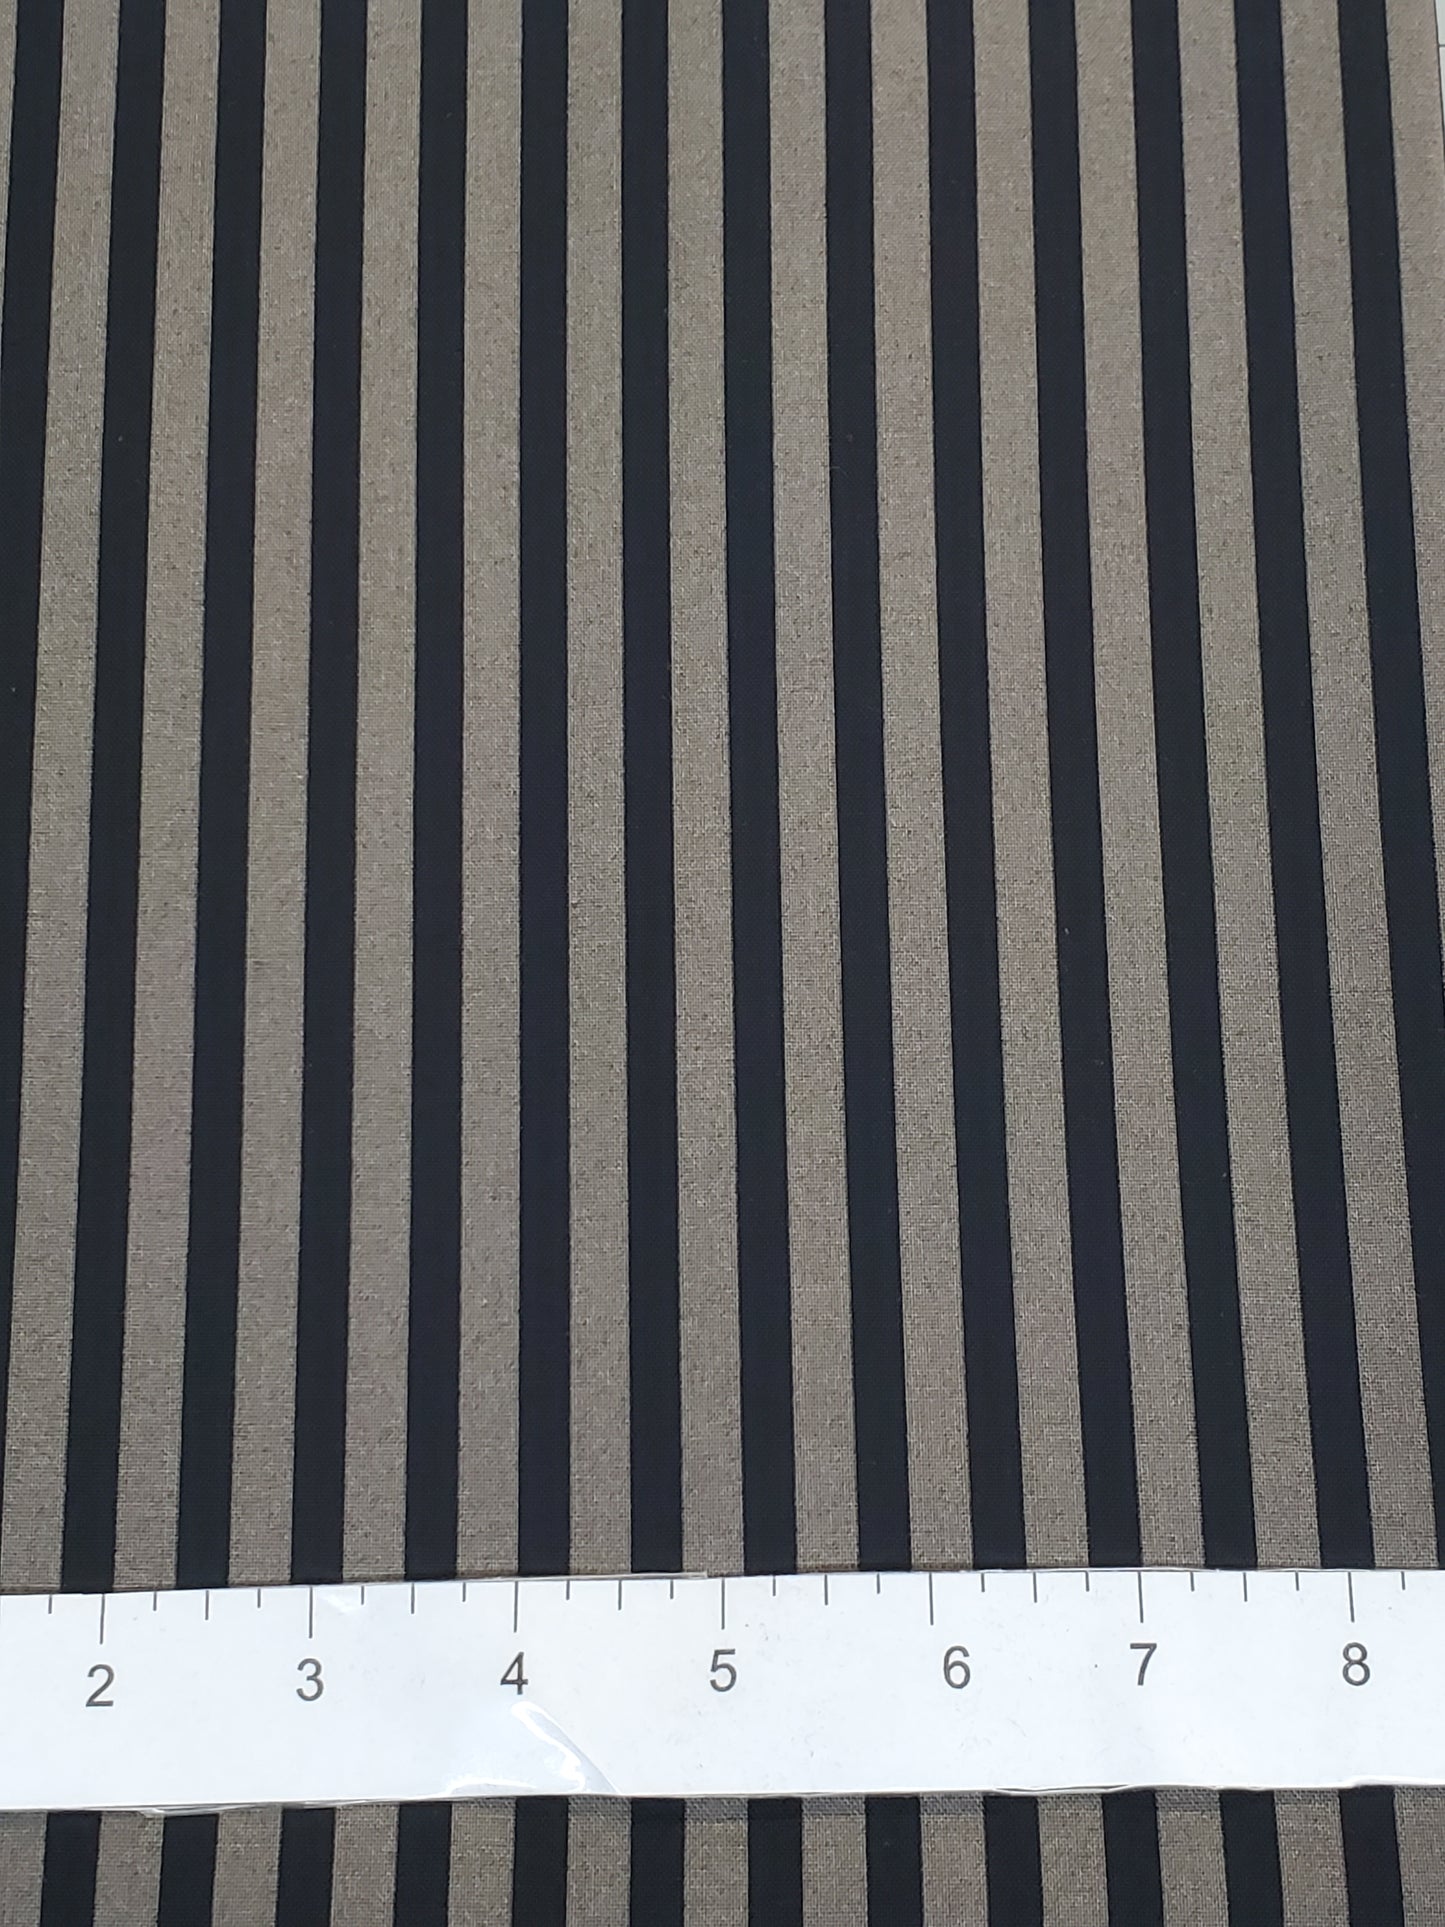 Stripes Quarter Inch Shadow